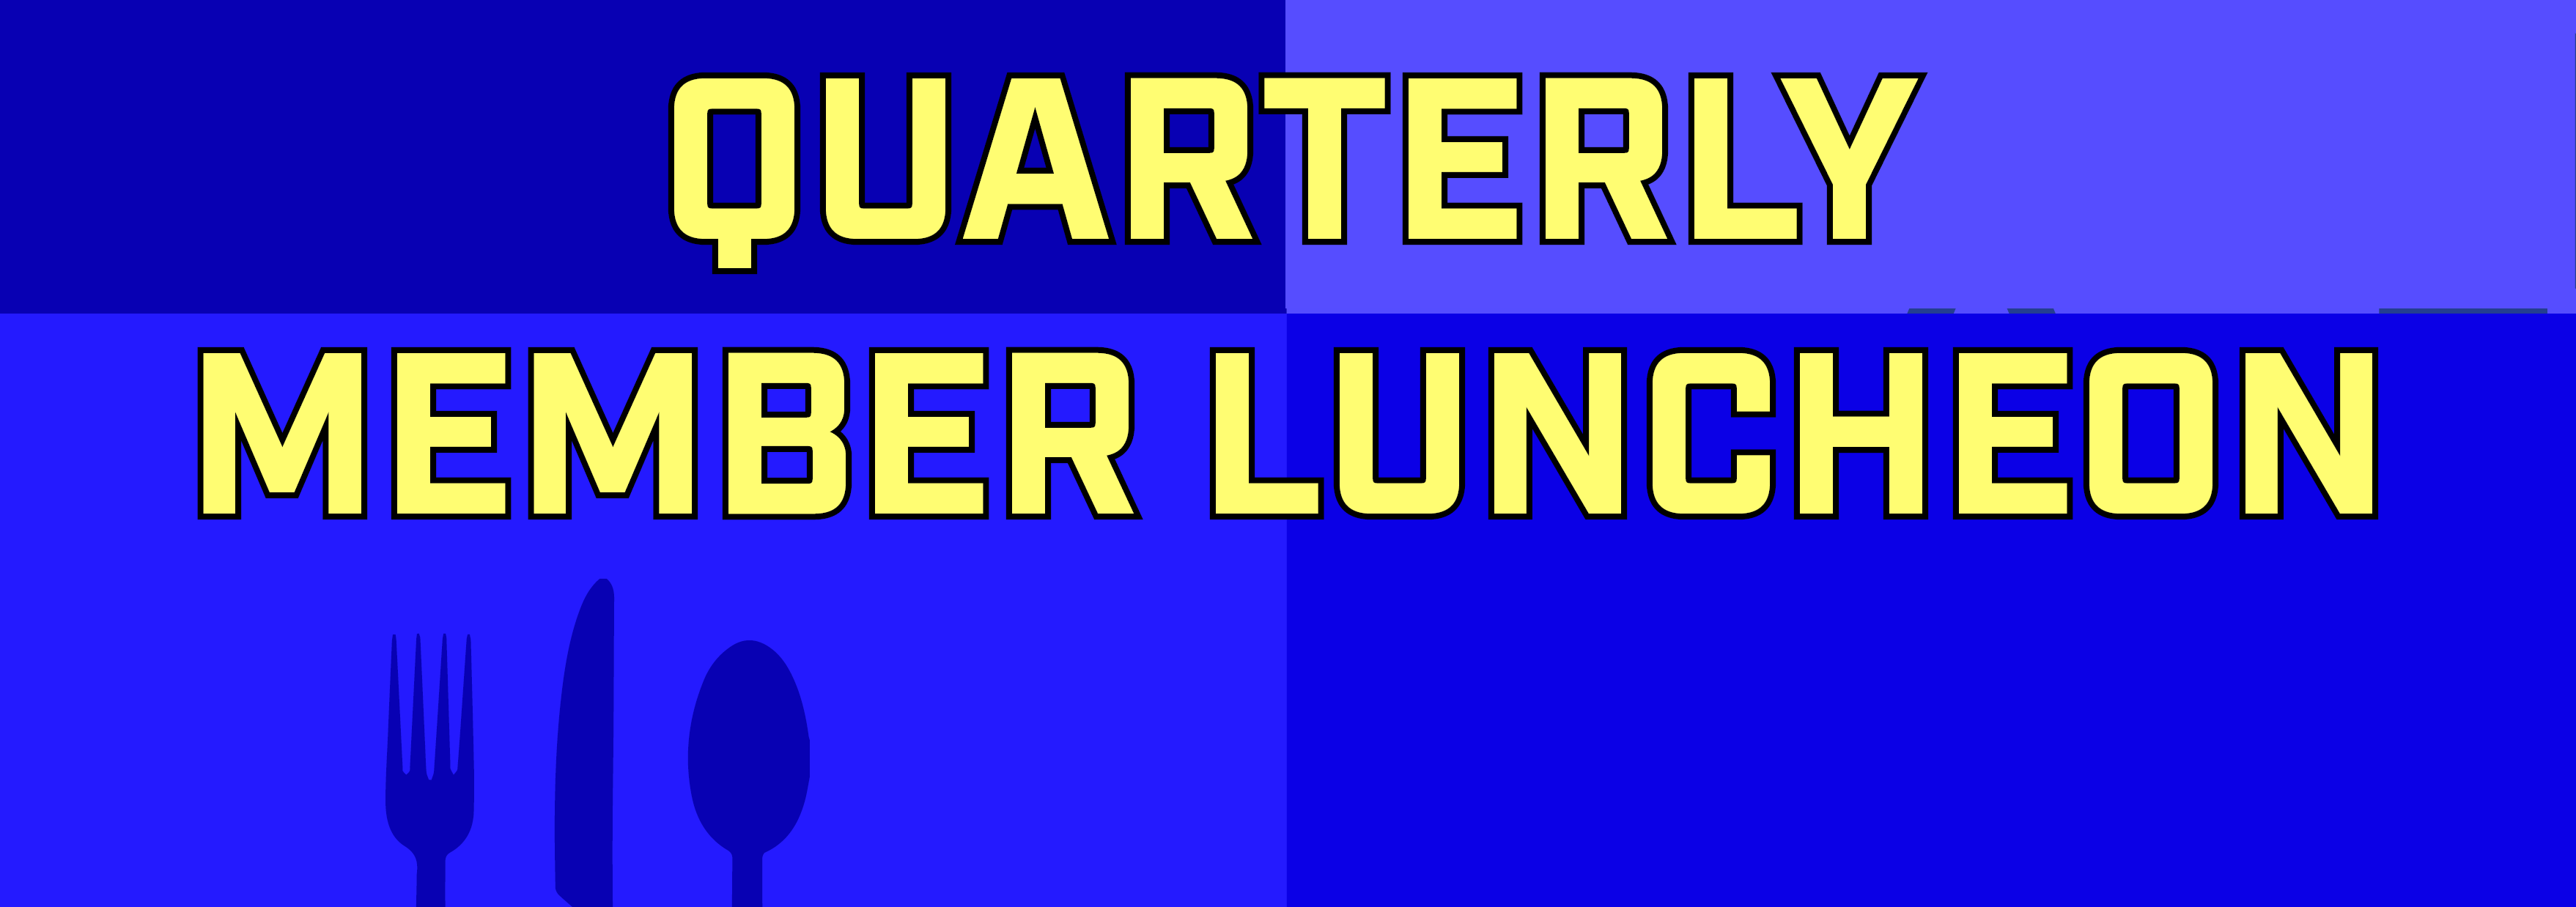 IECRM Quarterly Membership Luncheon - GRID 2.0